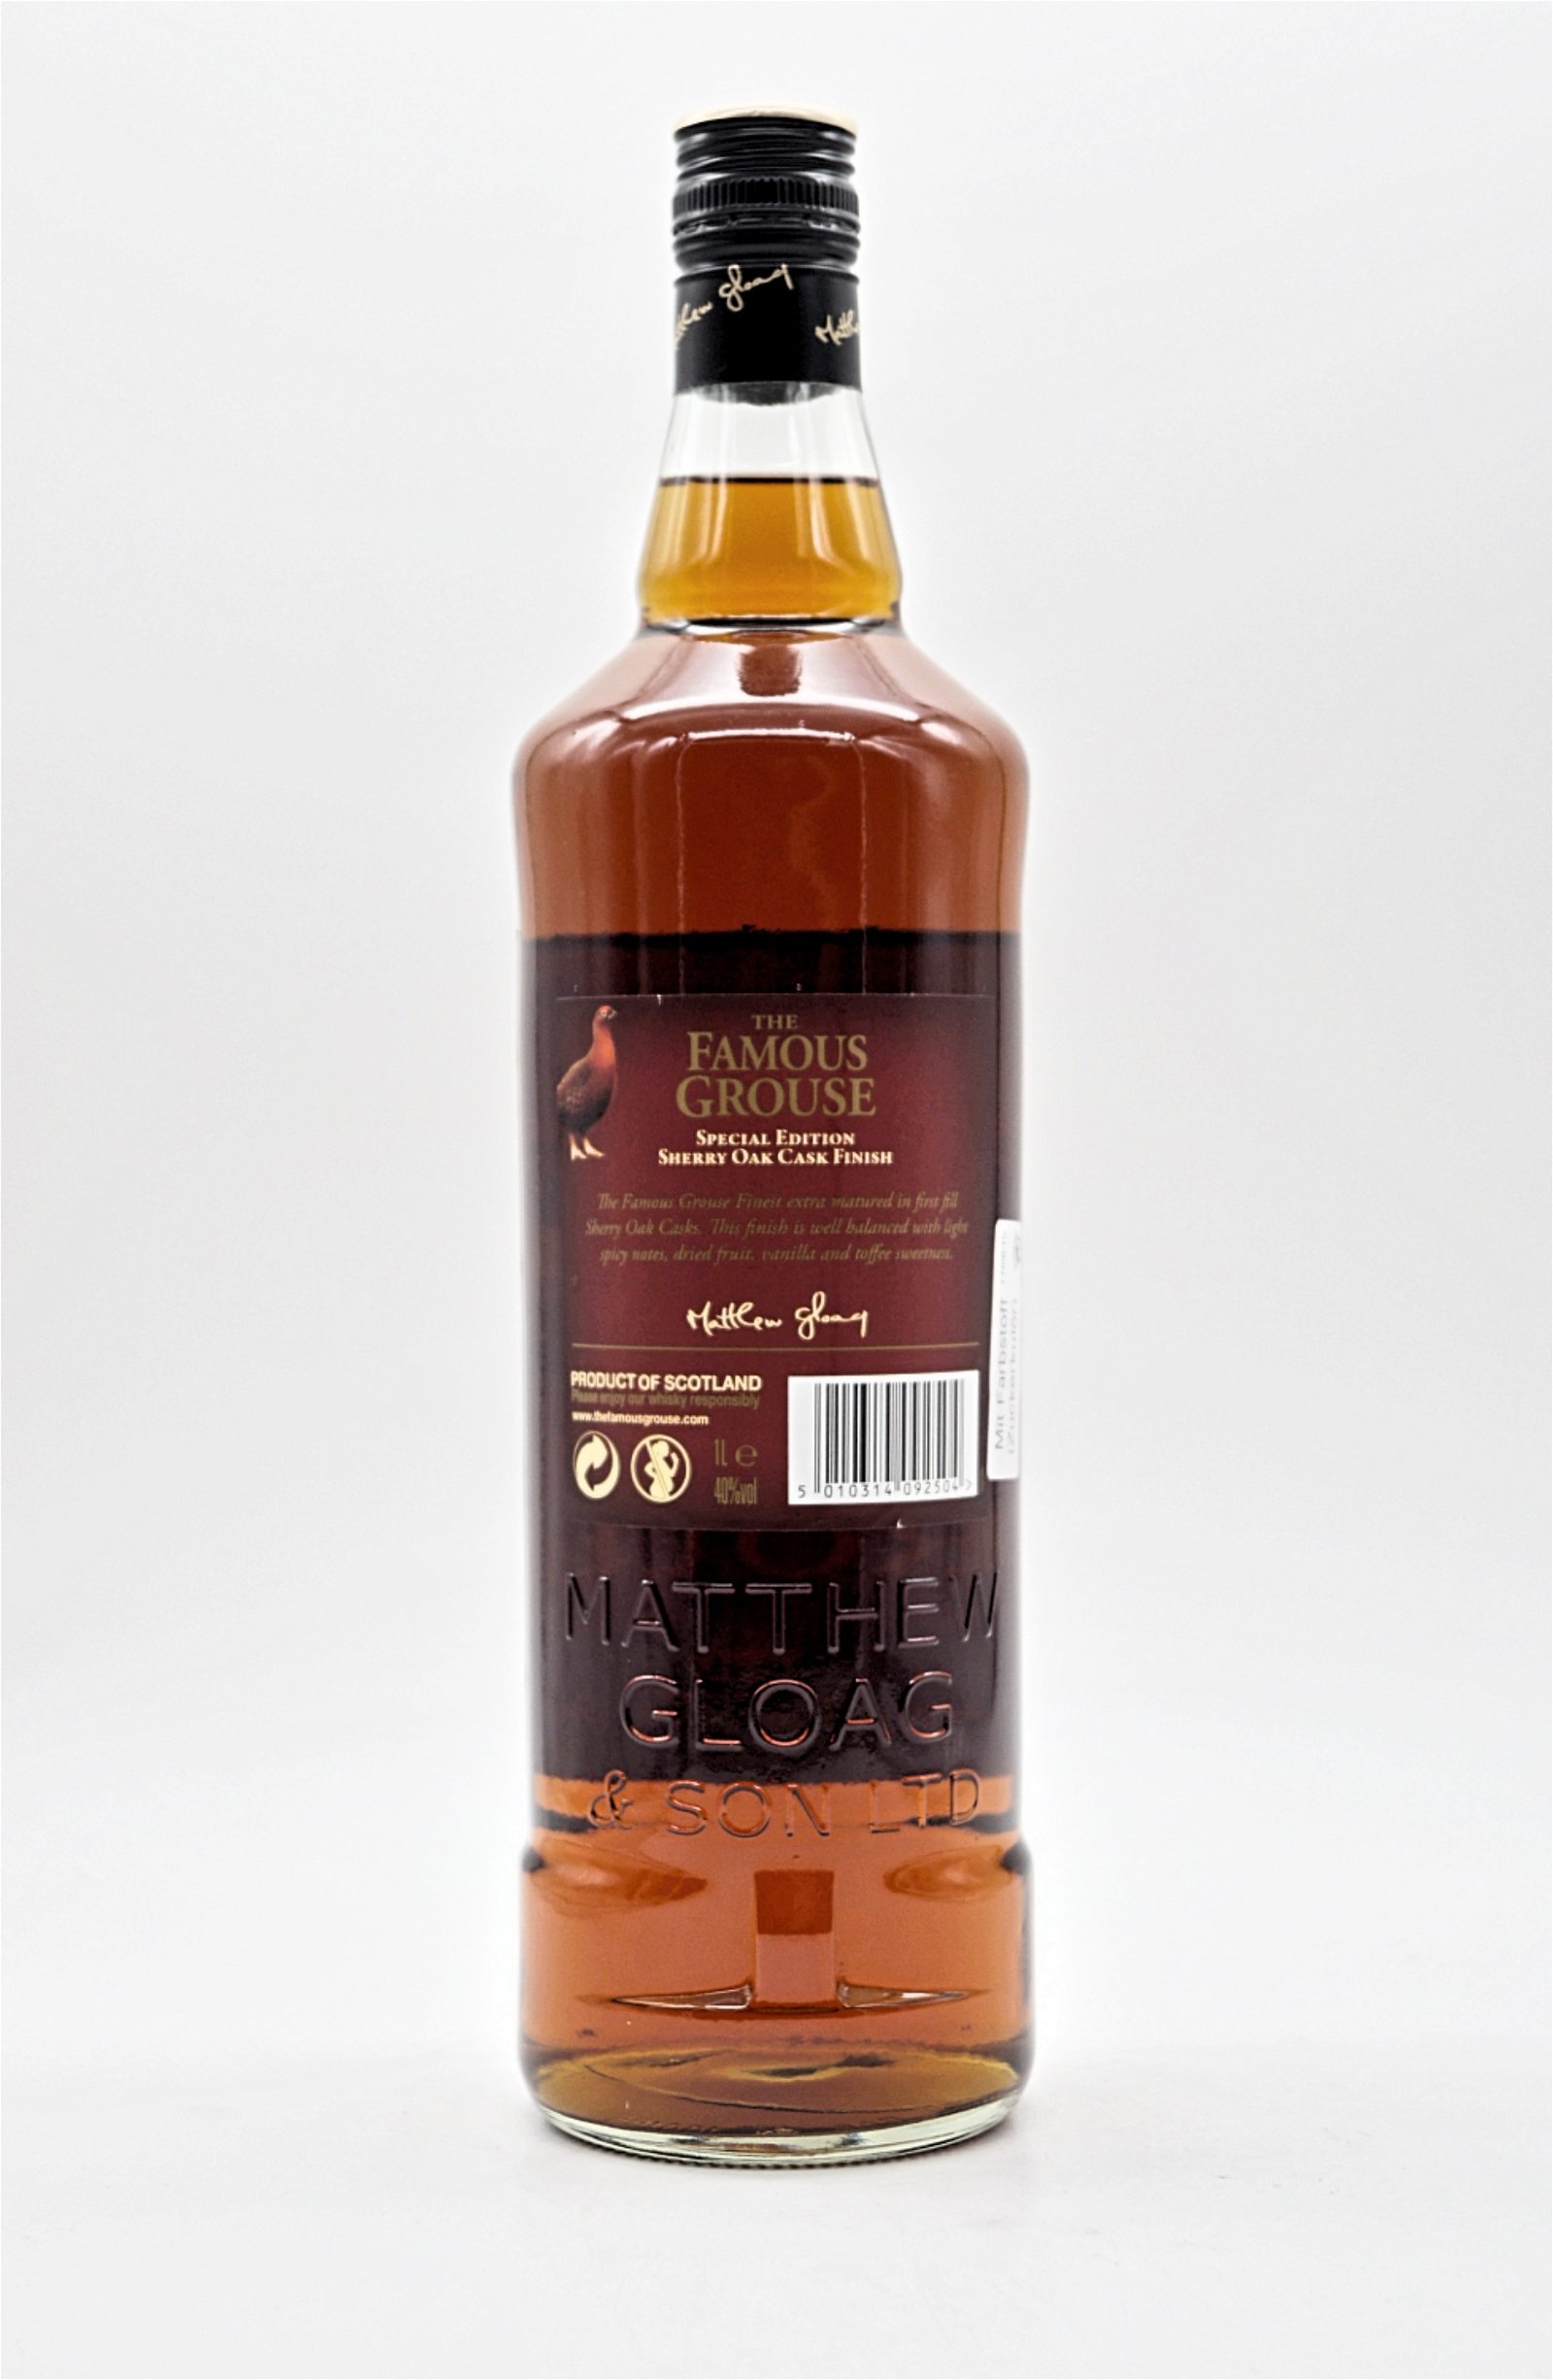 The Famous Grouse Sherry Oak Cask Finish Blended Scotch Whisky